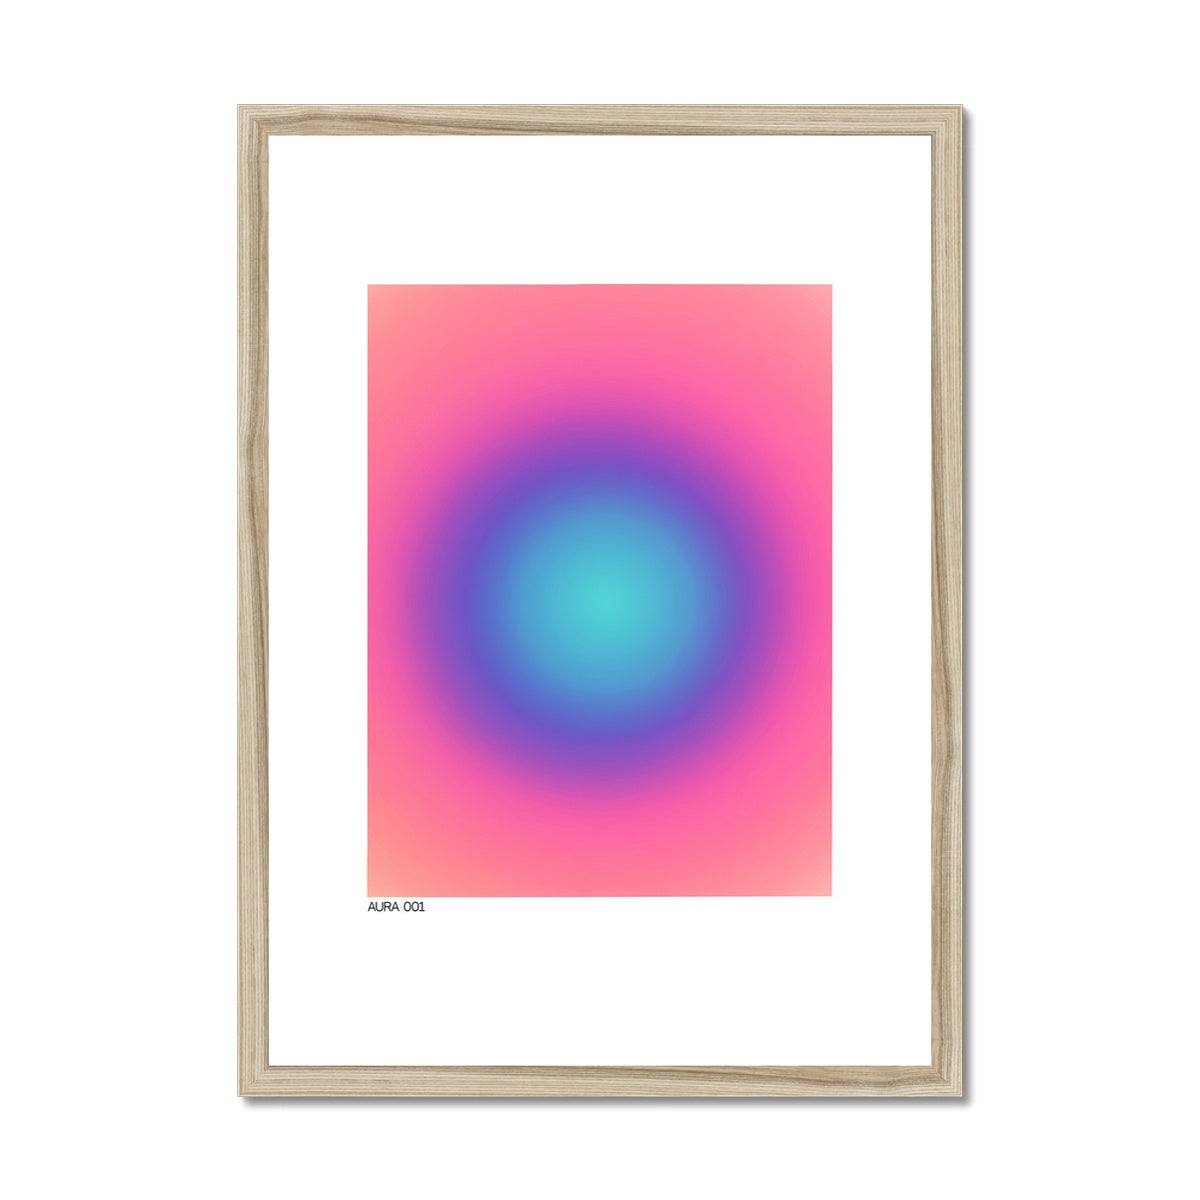 aura 001 Framed & Mounted Print